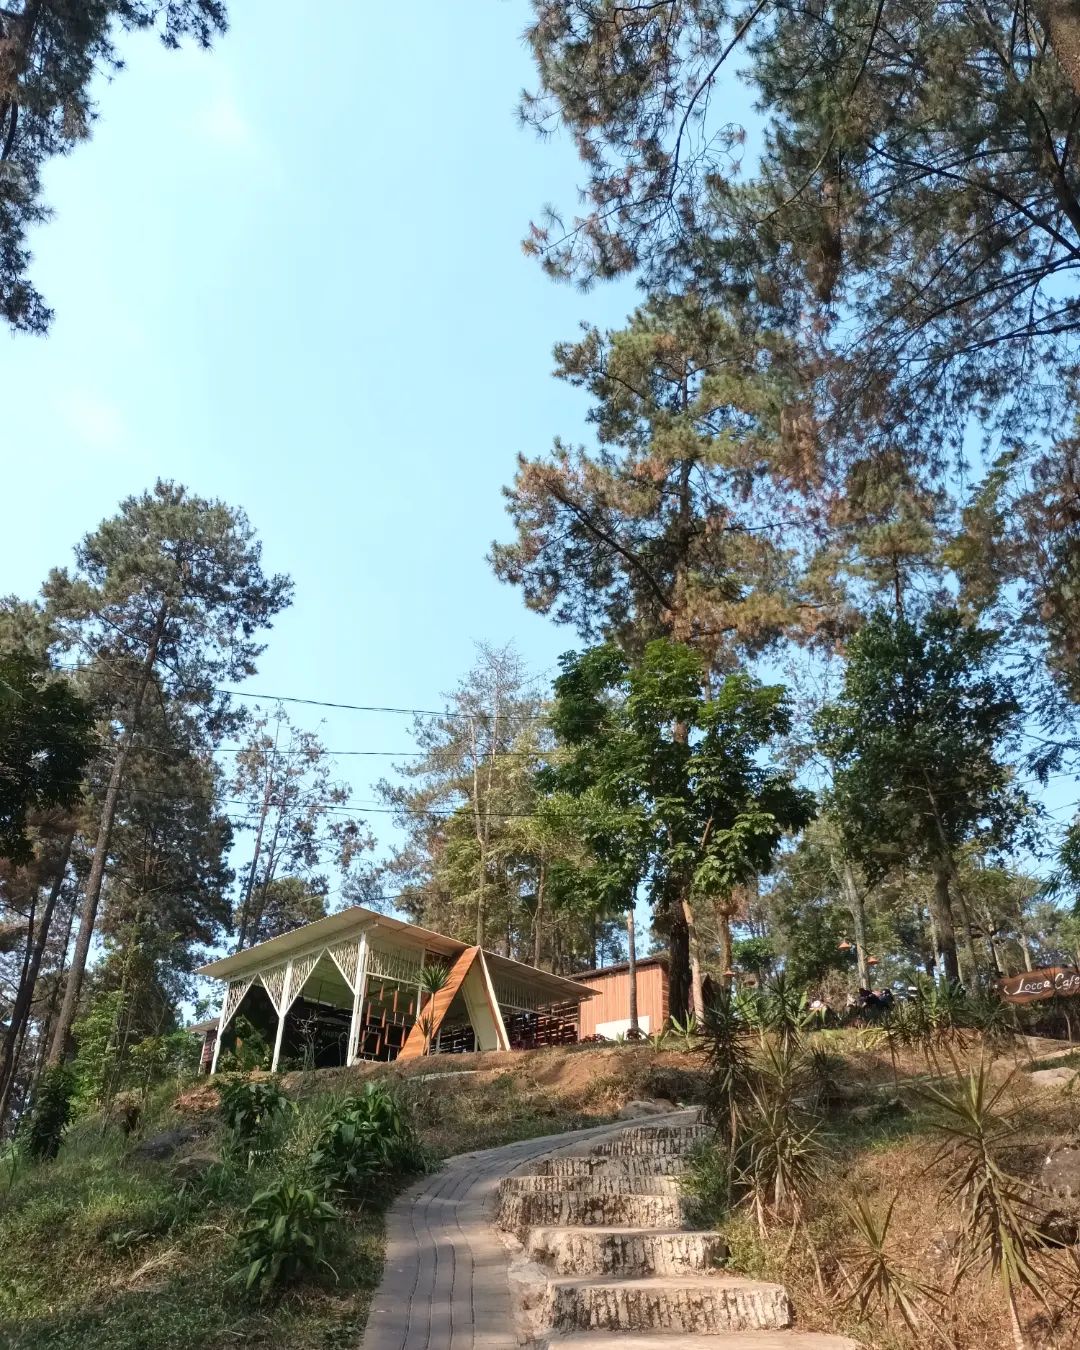 Jam Buka Locca Lodge Trawas Mojokerto Image From @lesyeuxdeiqis